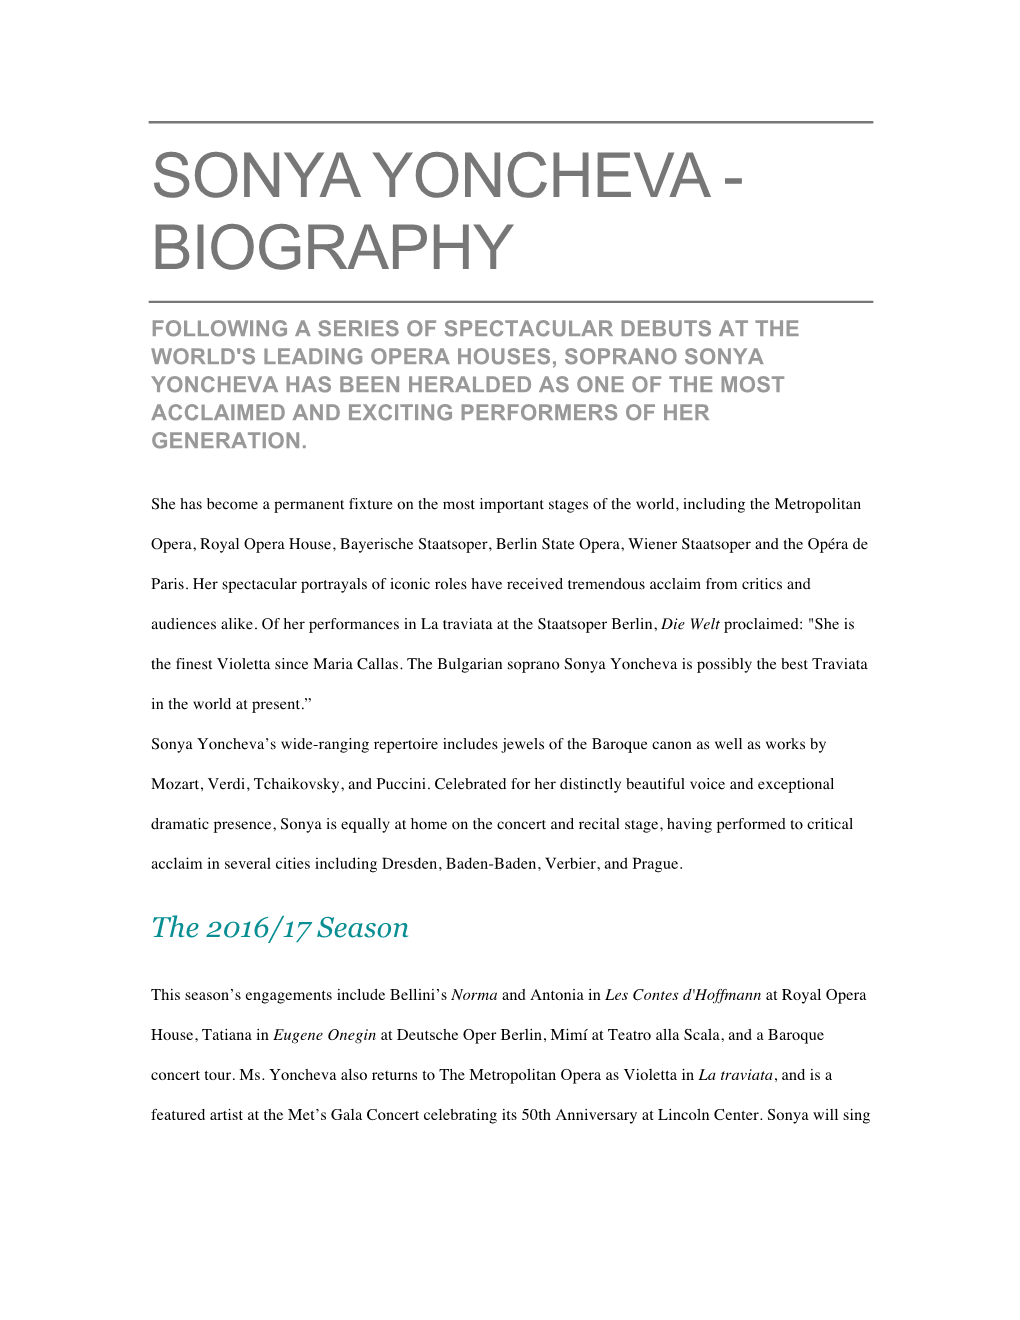 Sonya Yoncheva - Biography